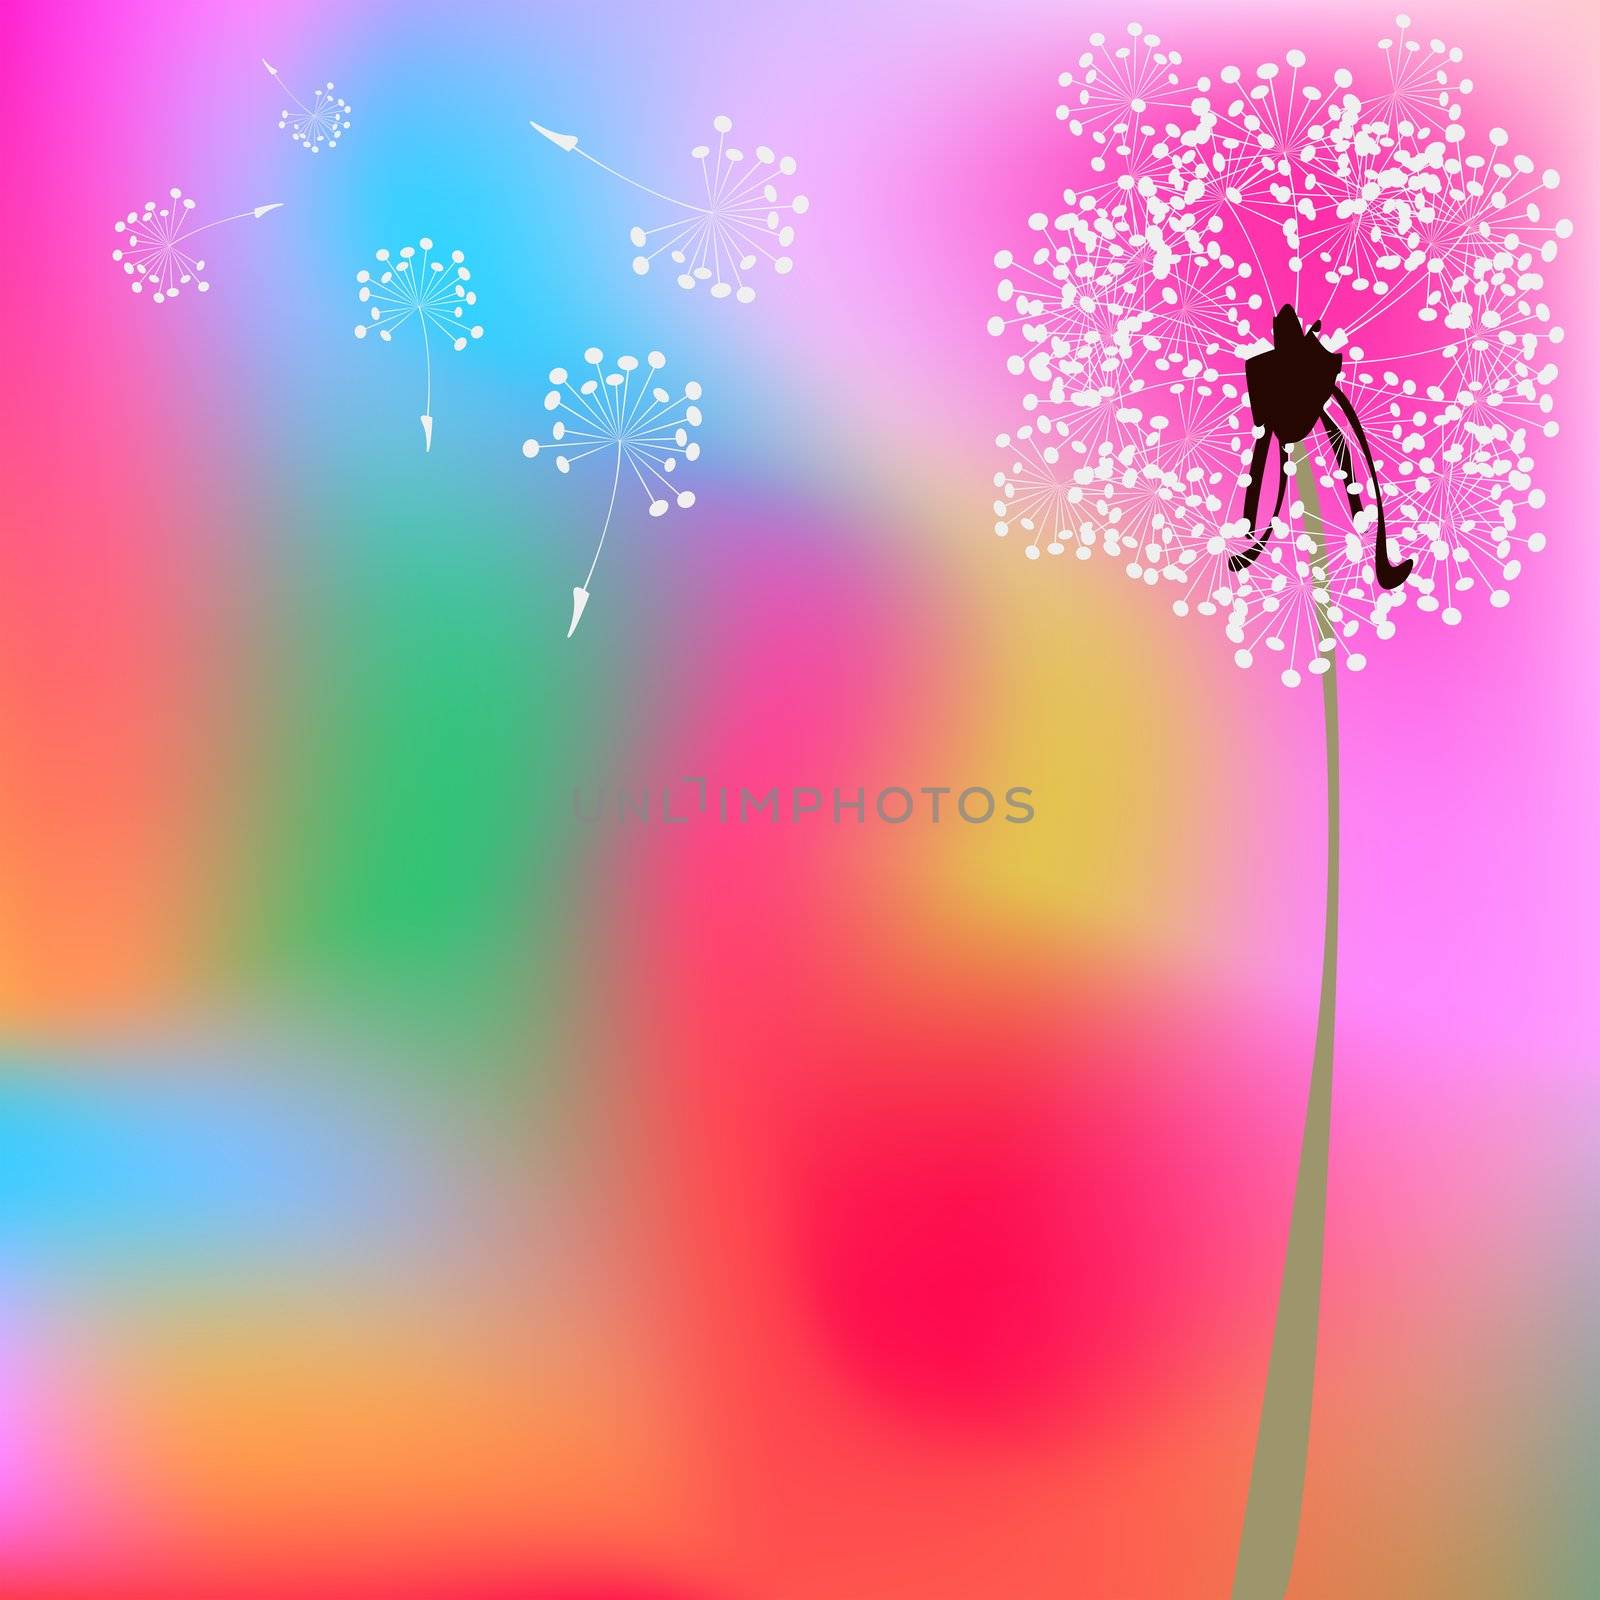 dandelion composition by robertosch